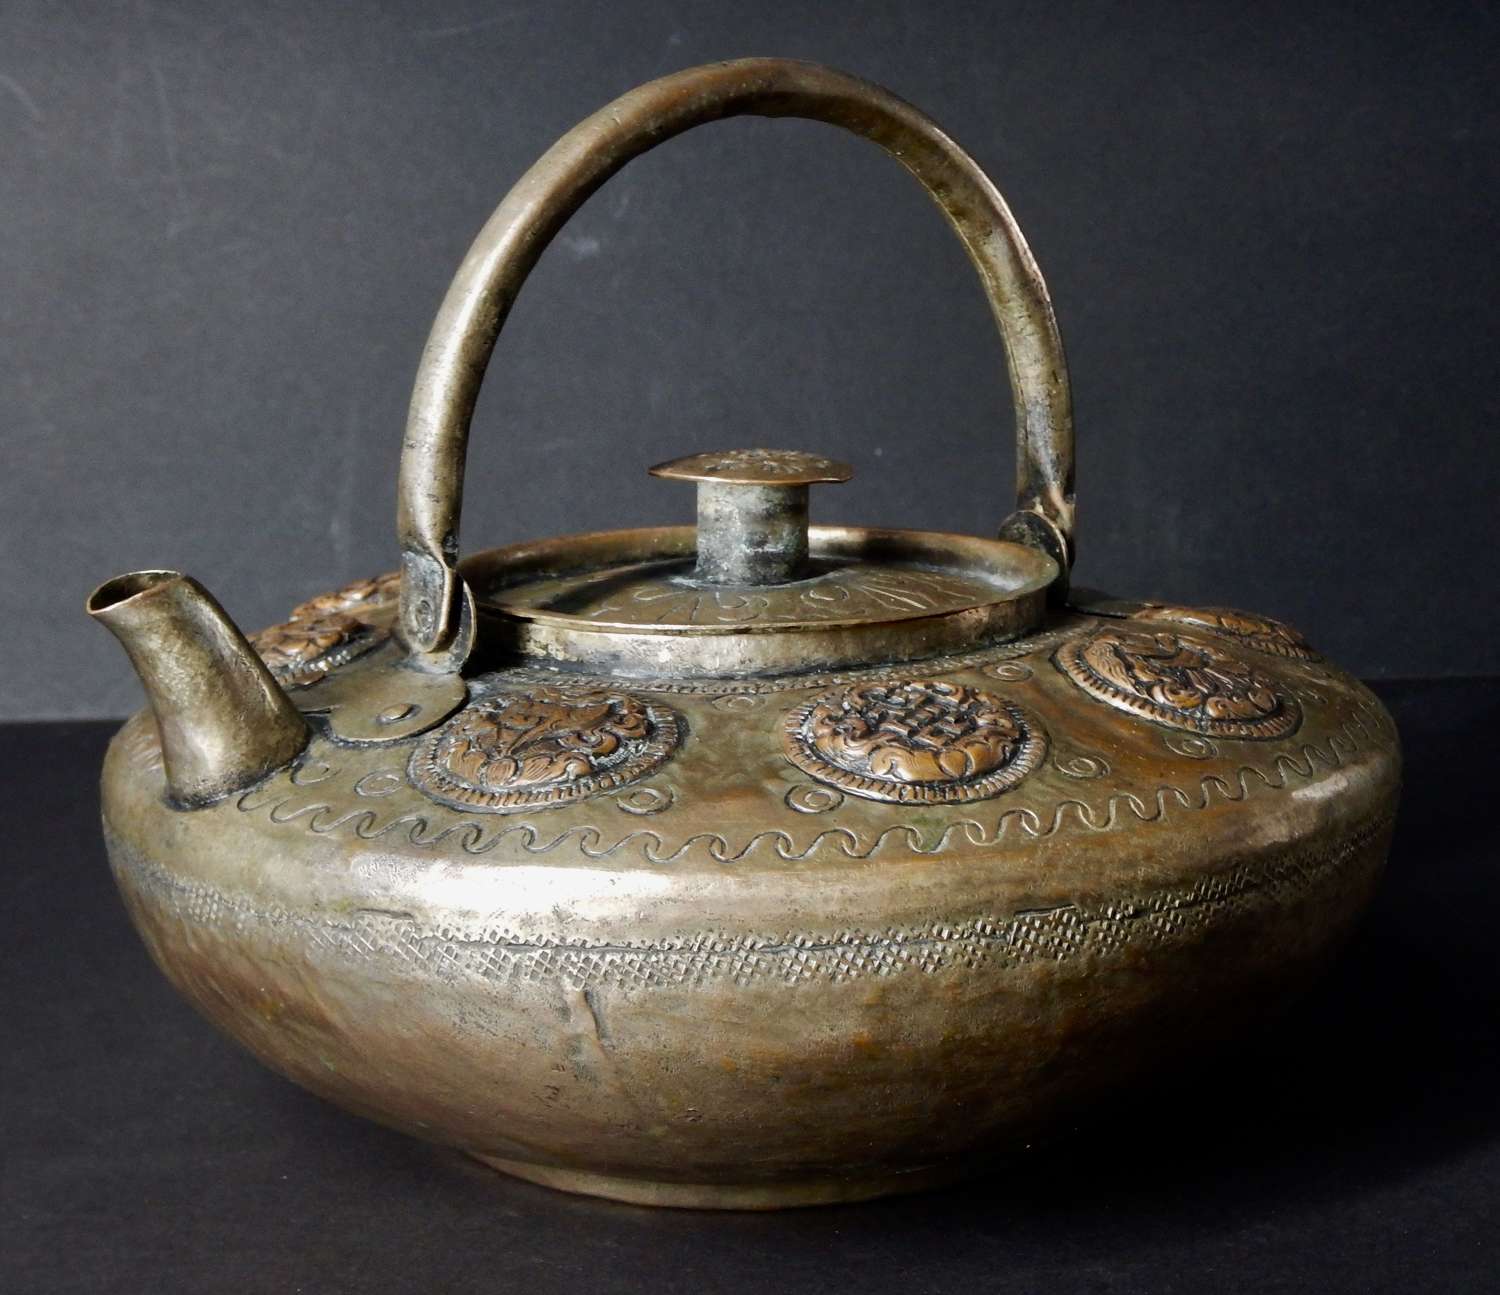 VERY RARE Antique Copper Tibetan Tea Kettle  - Symbols of Good Fortune